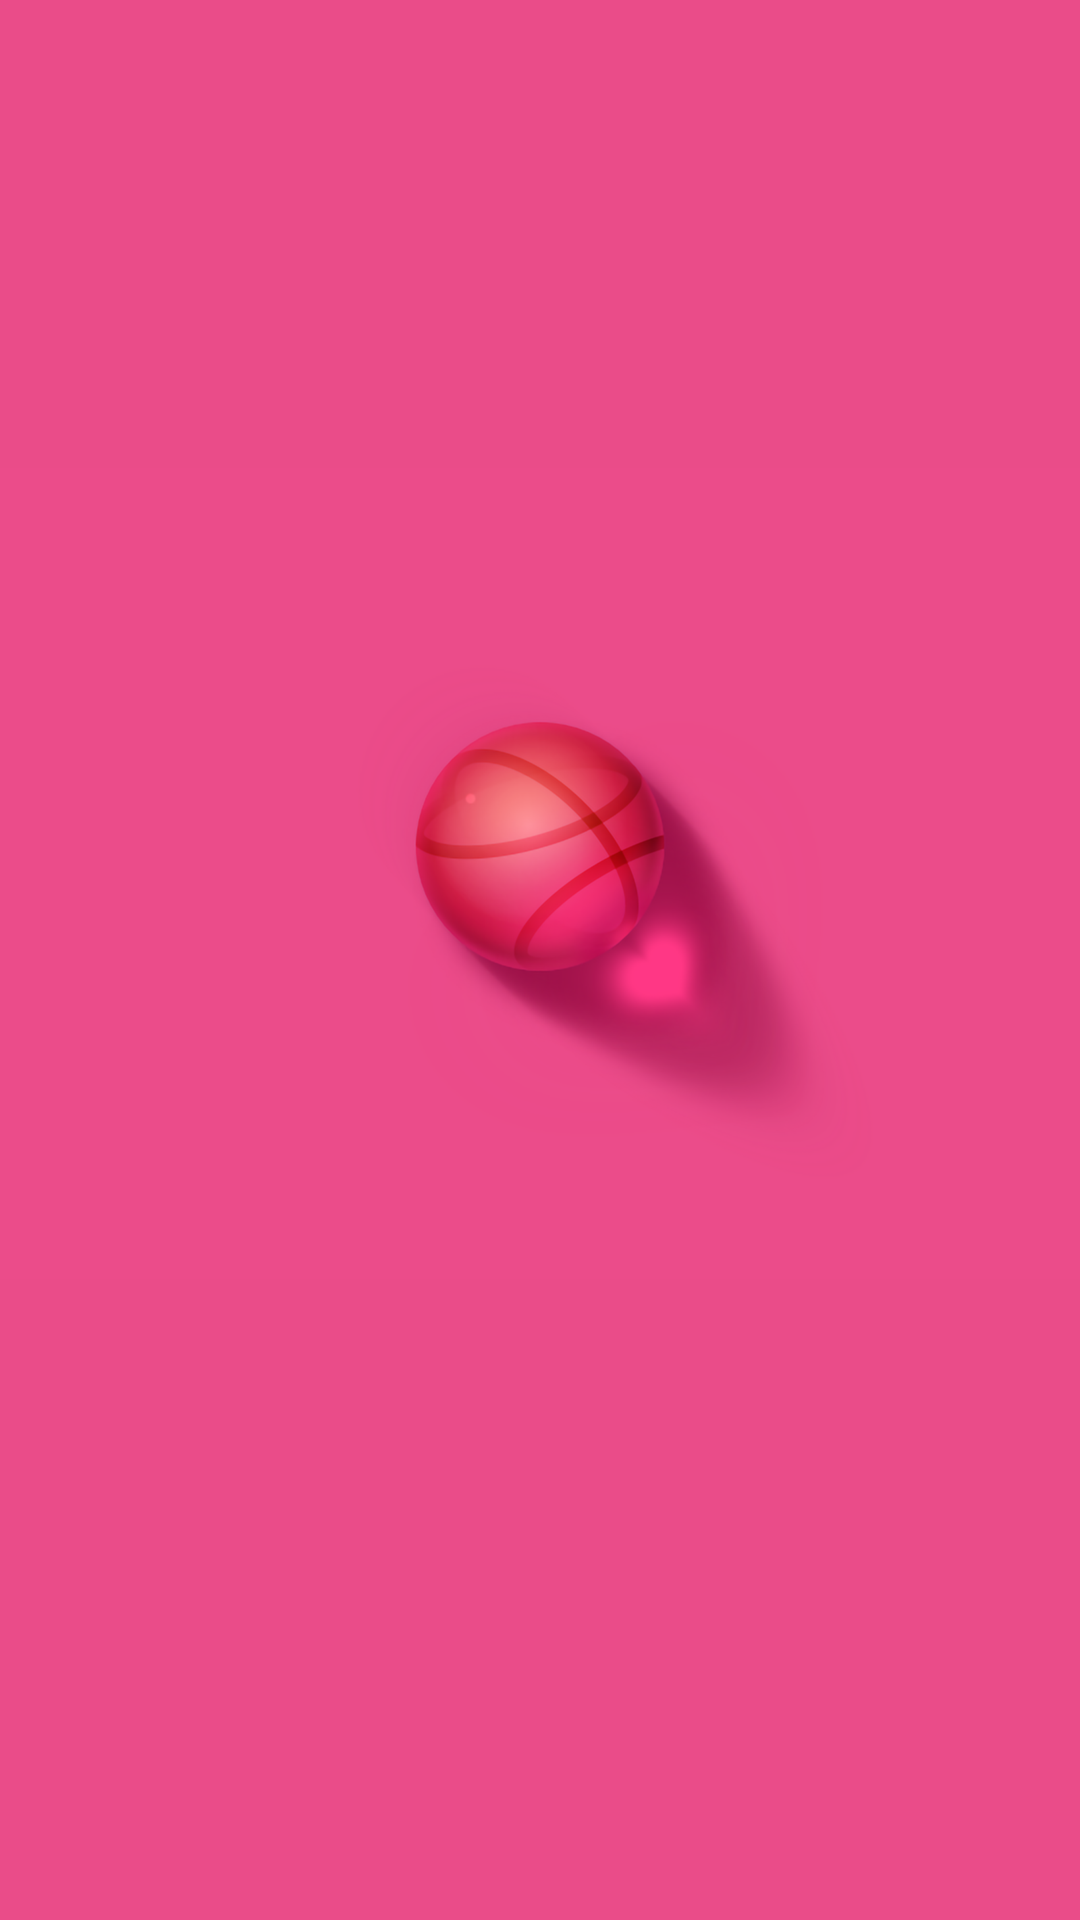 Nike x Pigalle Millennial Pink Basketball  Pink basketball, Pastel pink  aesthetic, Ball aesthetic